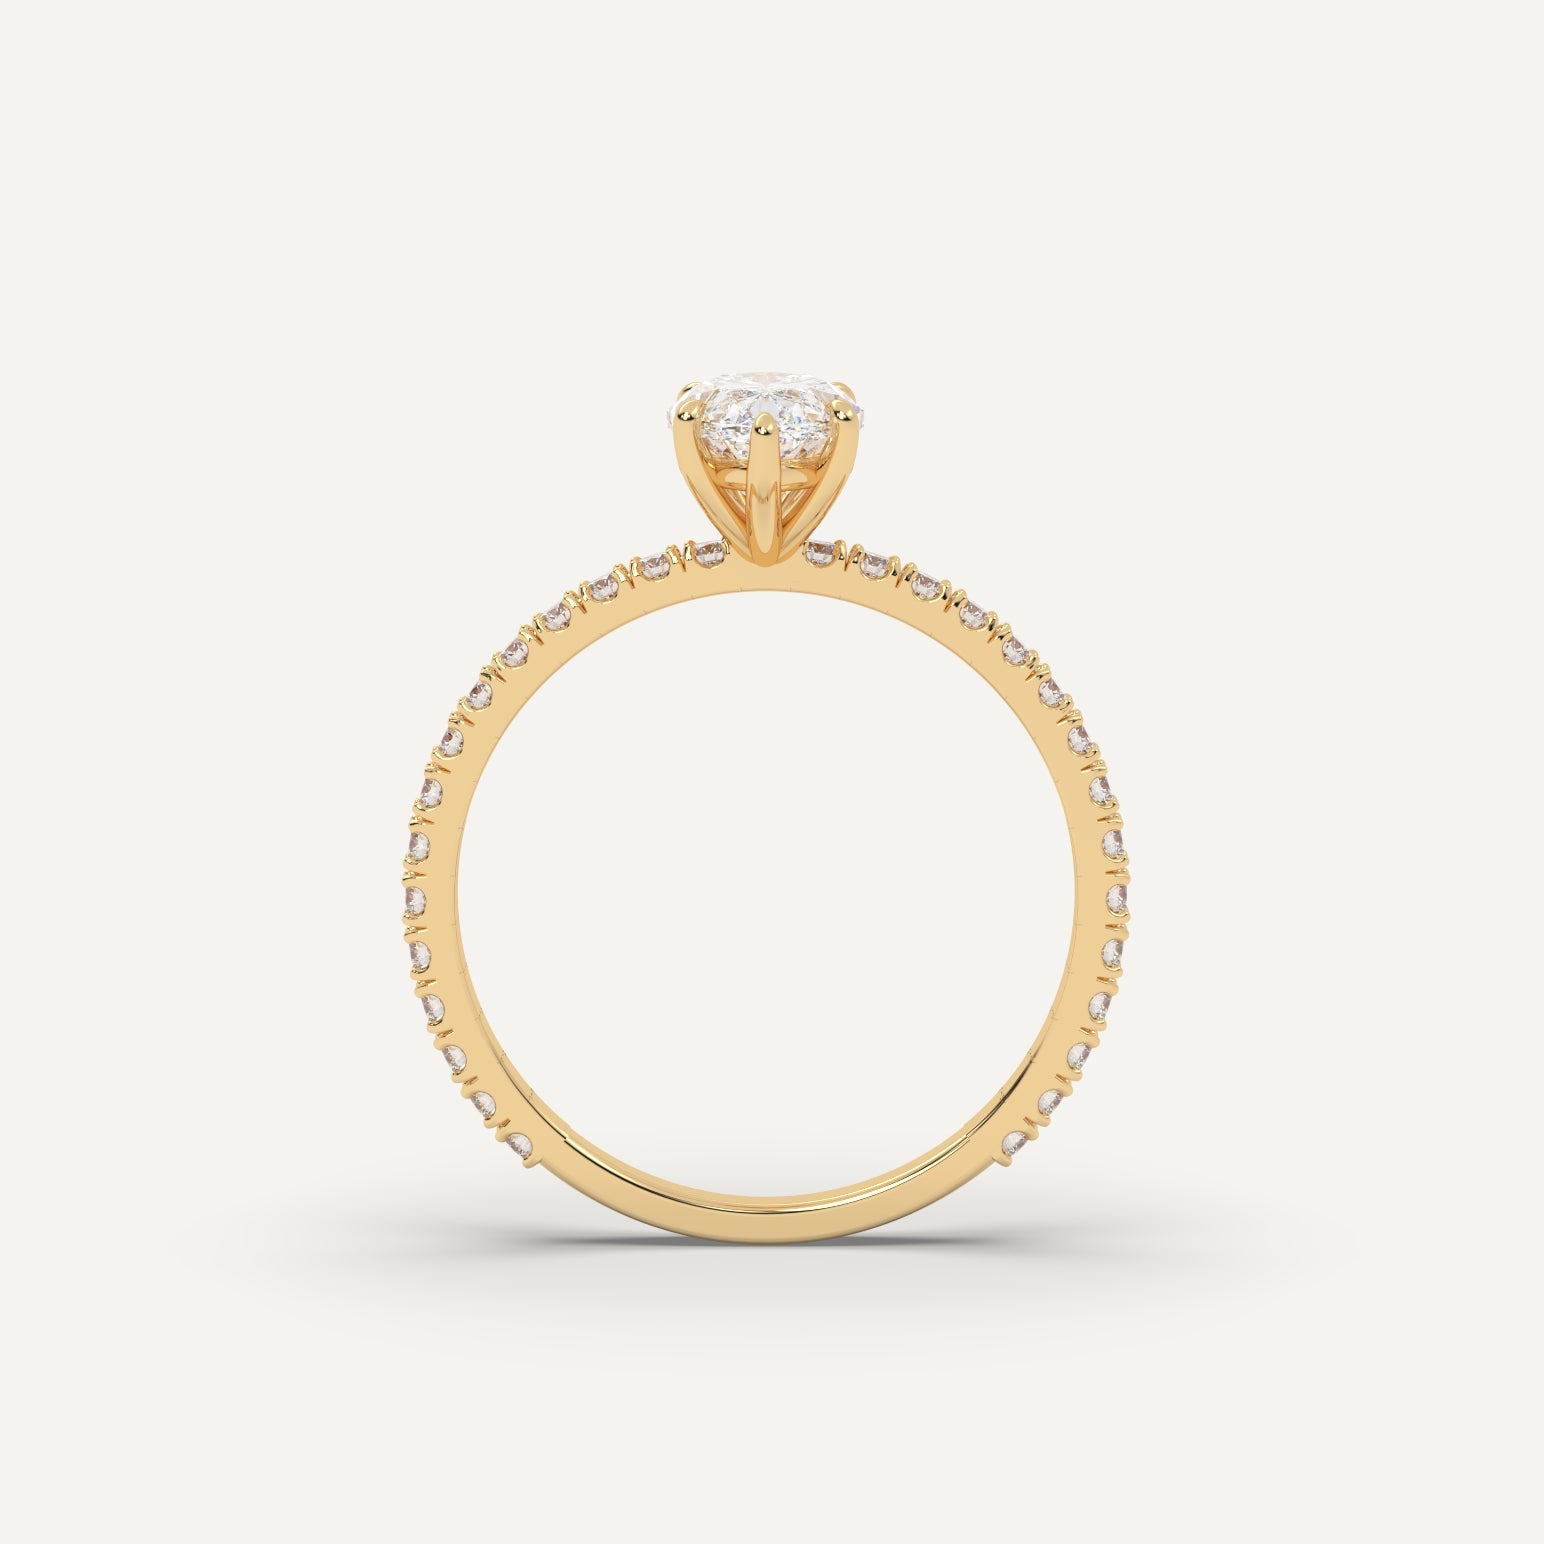 Marquise Cut Diamond Engagement Ring - 1 carat